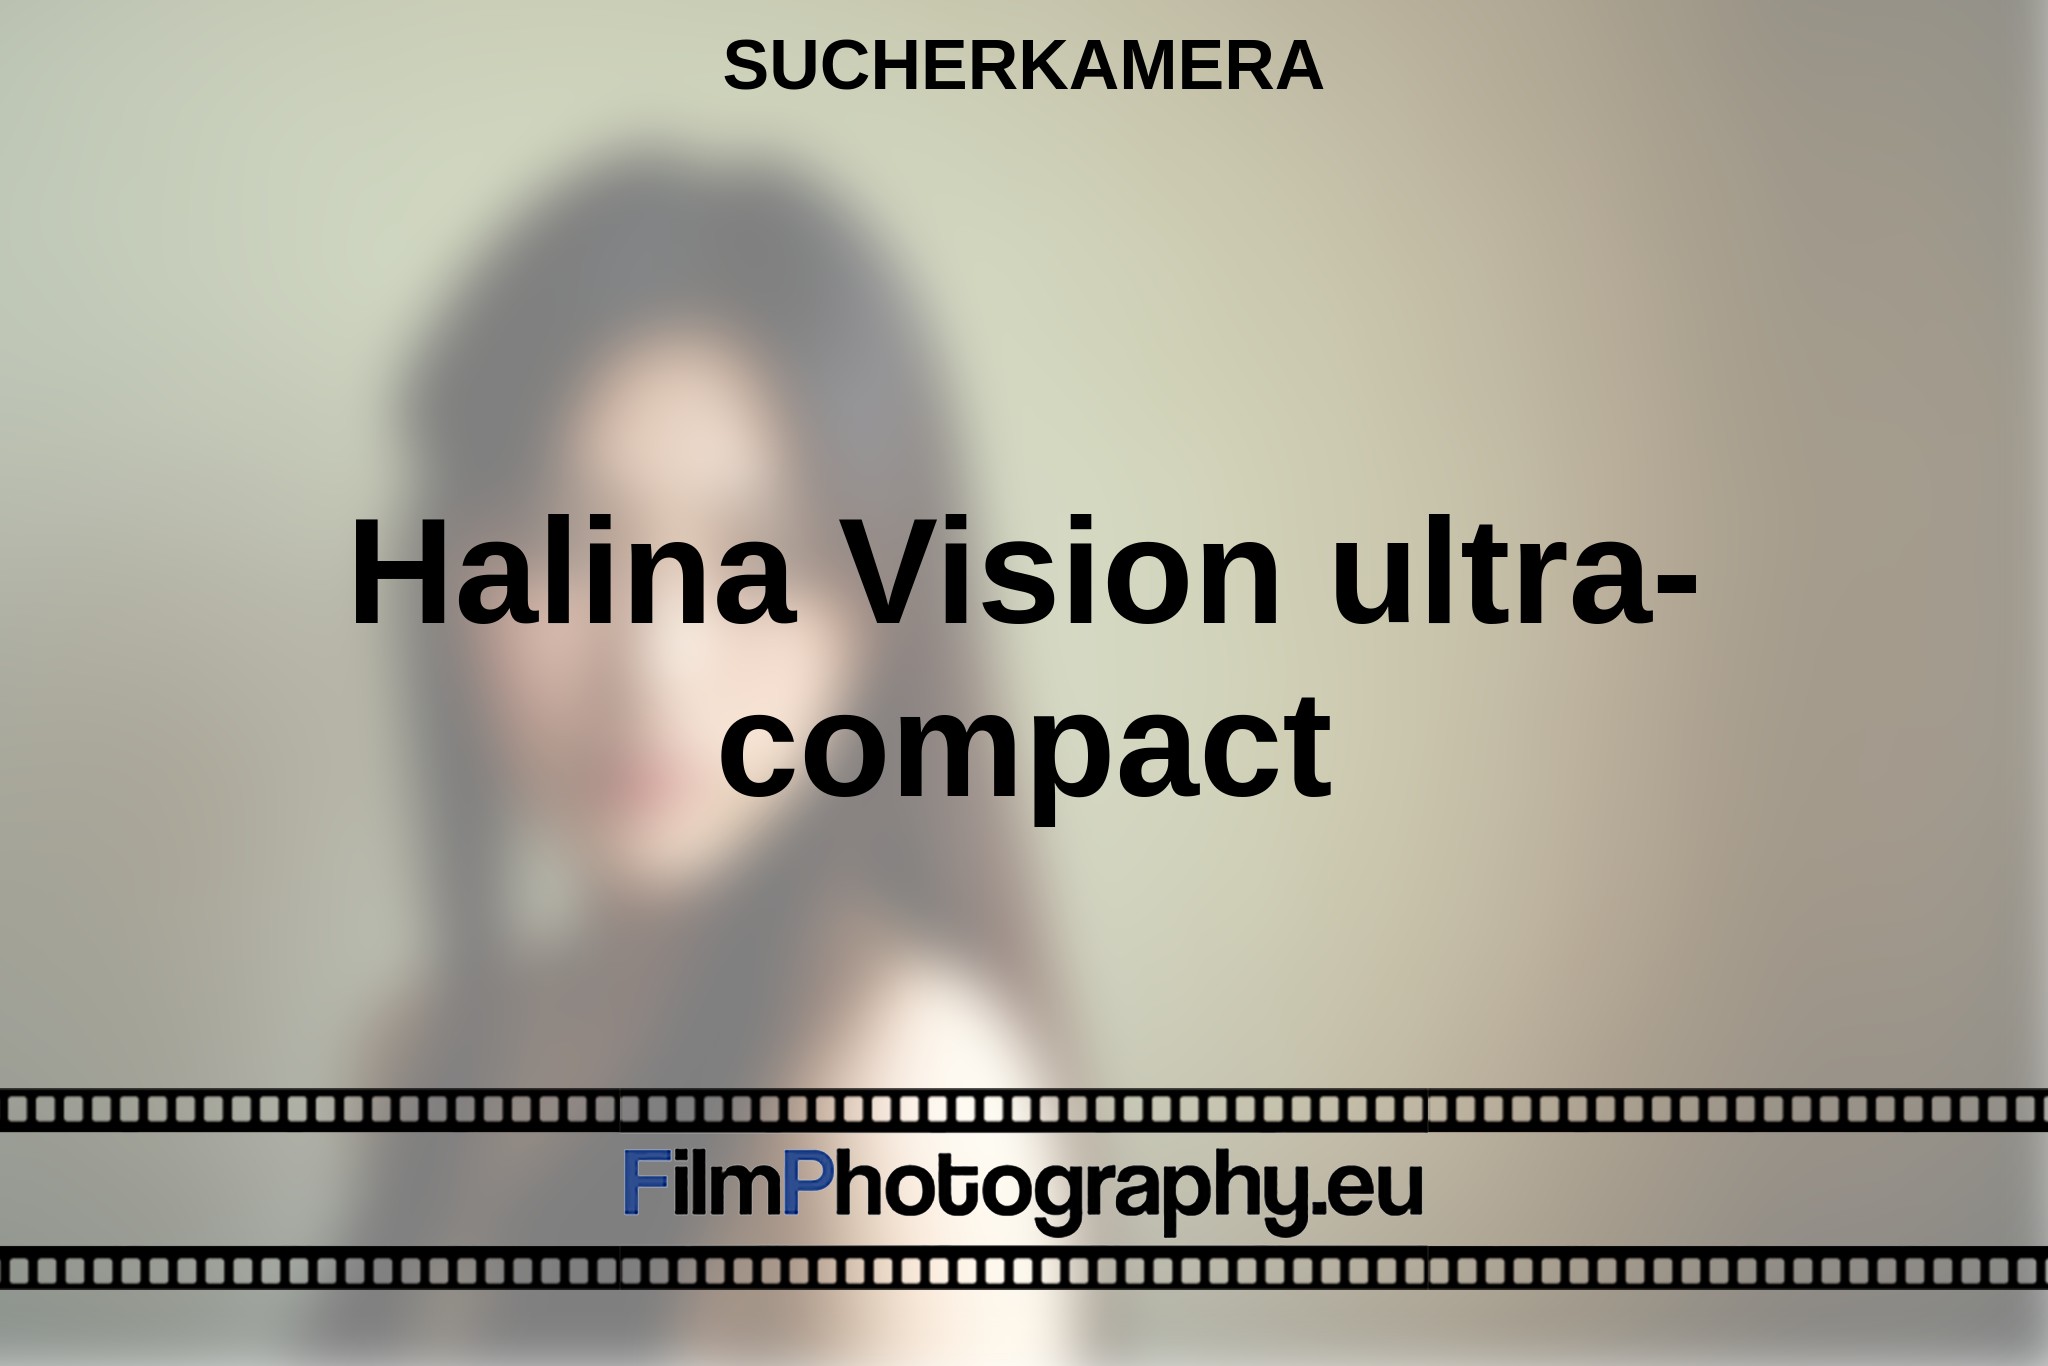 halina-vision-ultra-compact-sucherkamera-bnv.jpg